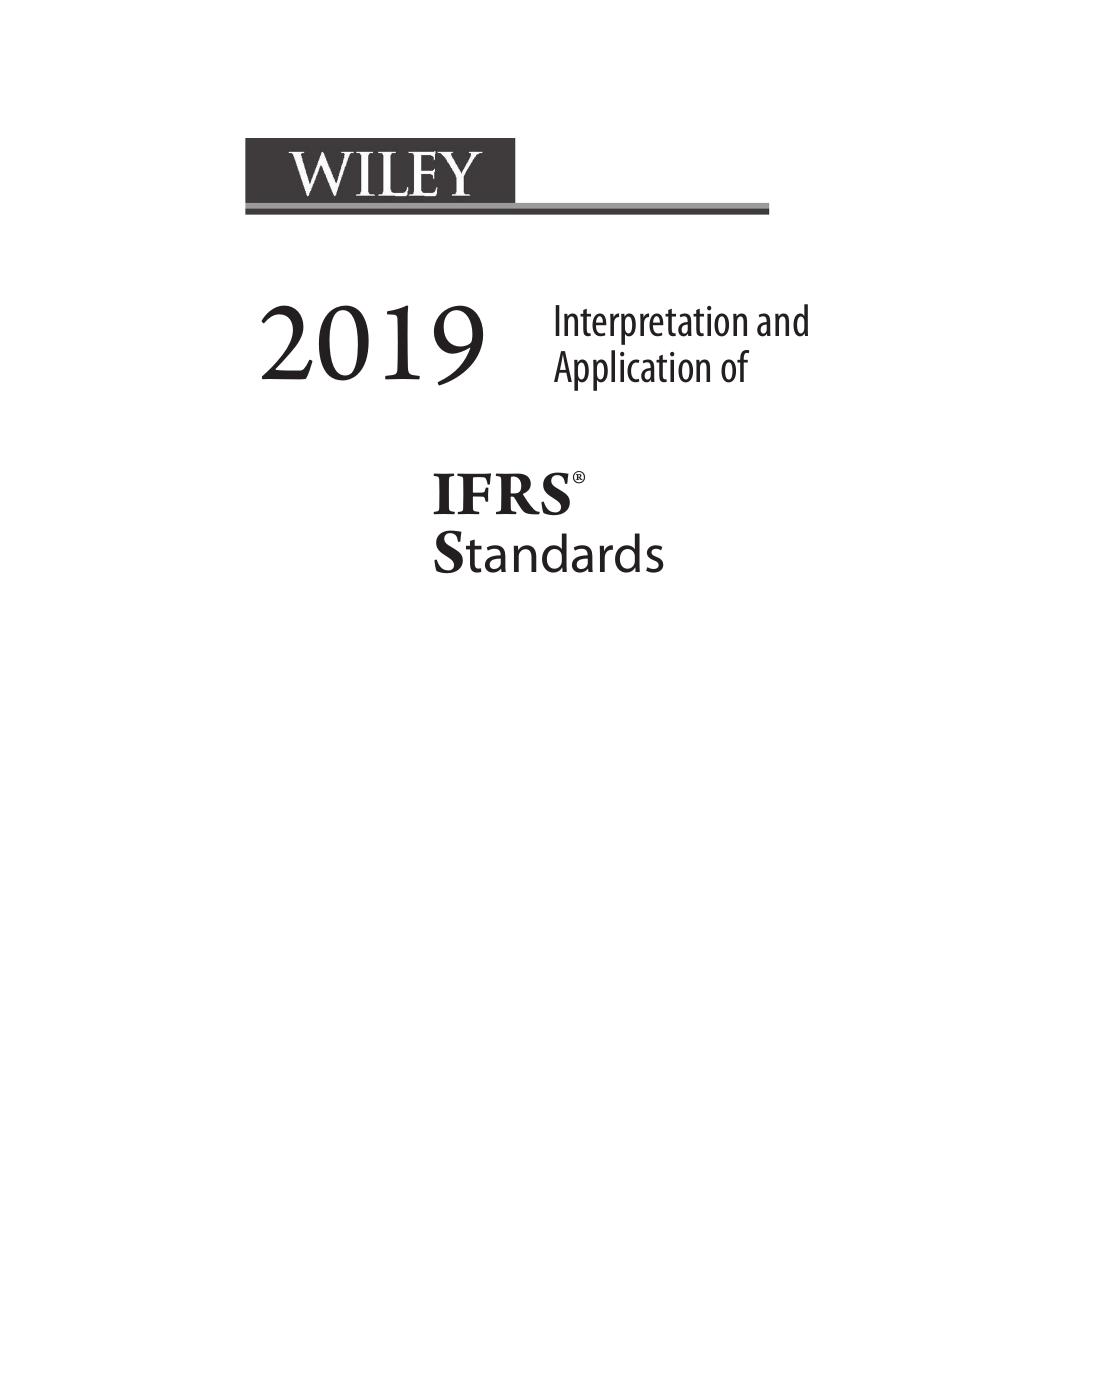 Wiley Interpretation and Application of IFRS Standards by PKF International Ltd